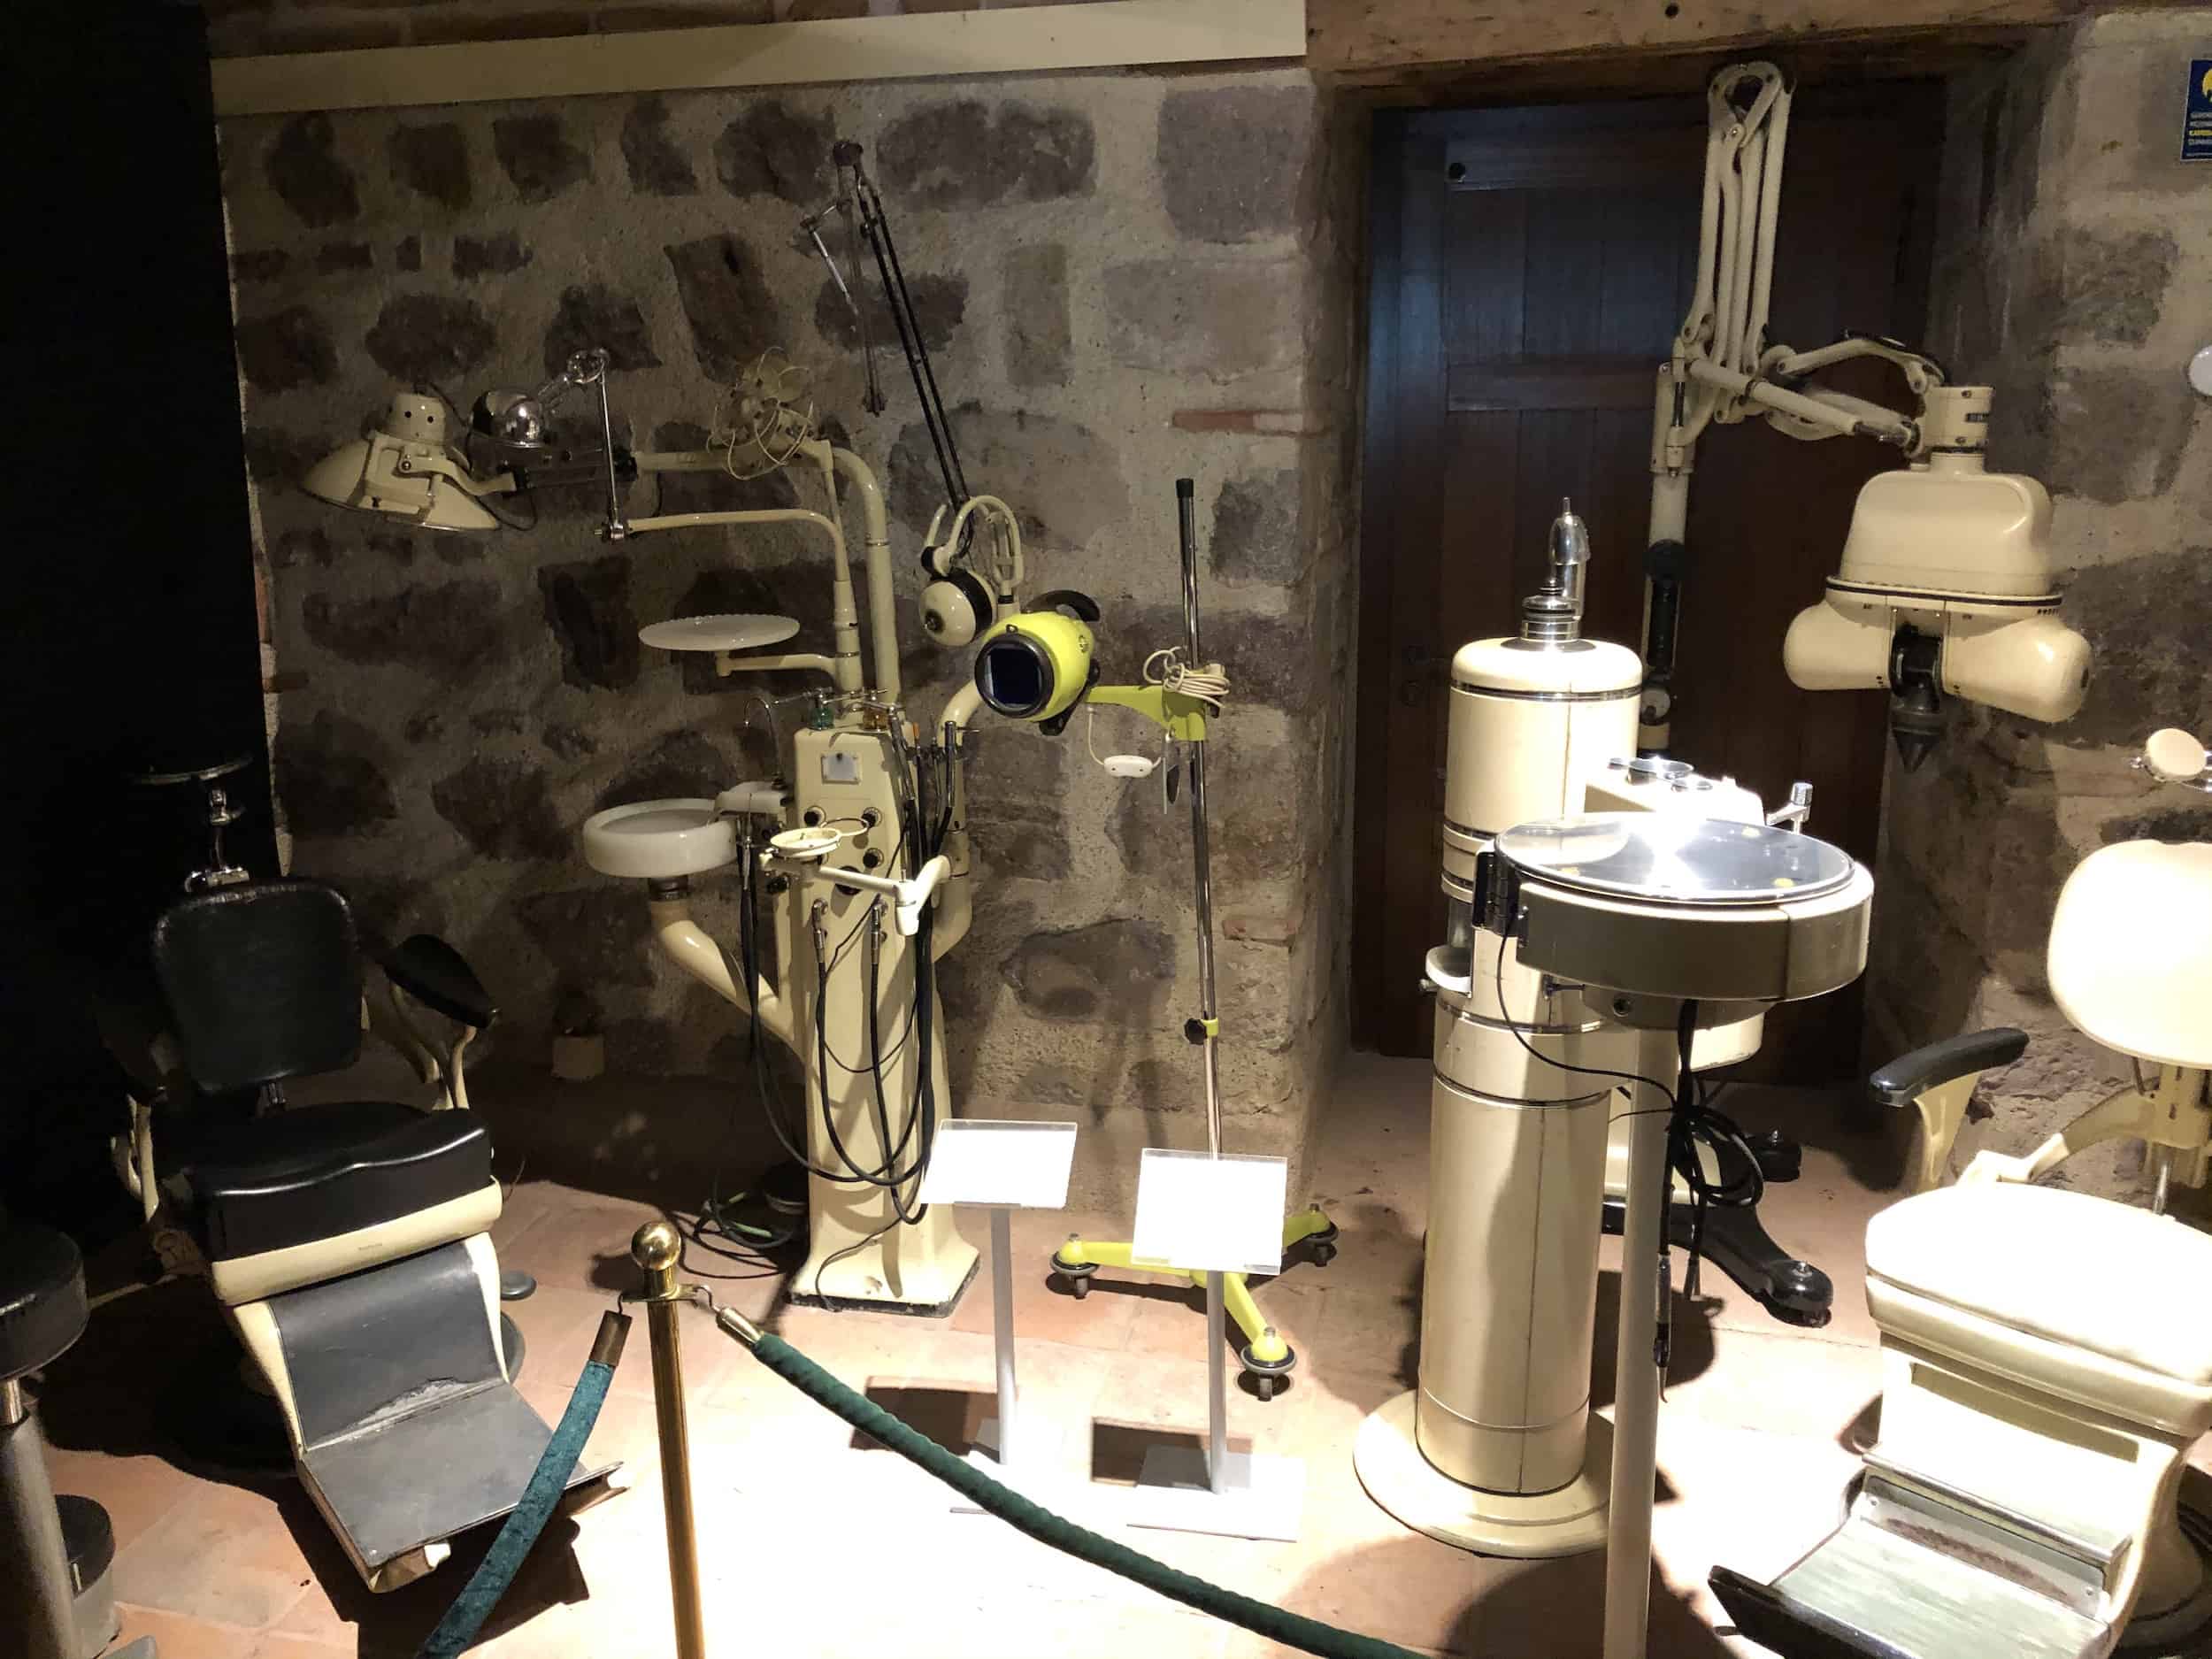 Dental equipment at the Rahmi M. Koç Museum in Ankara, Turkey